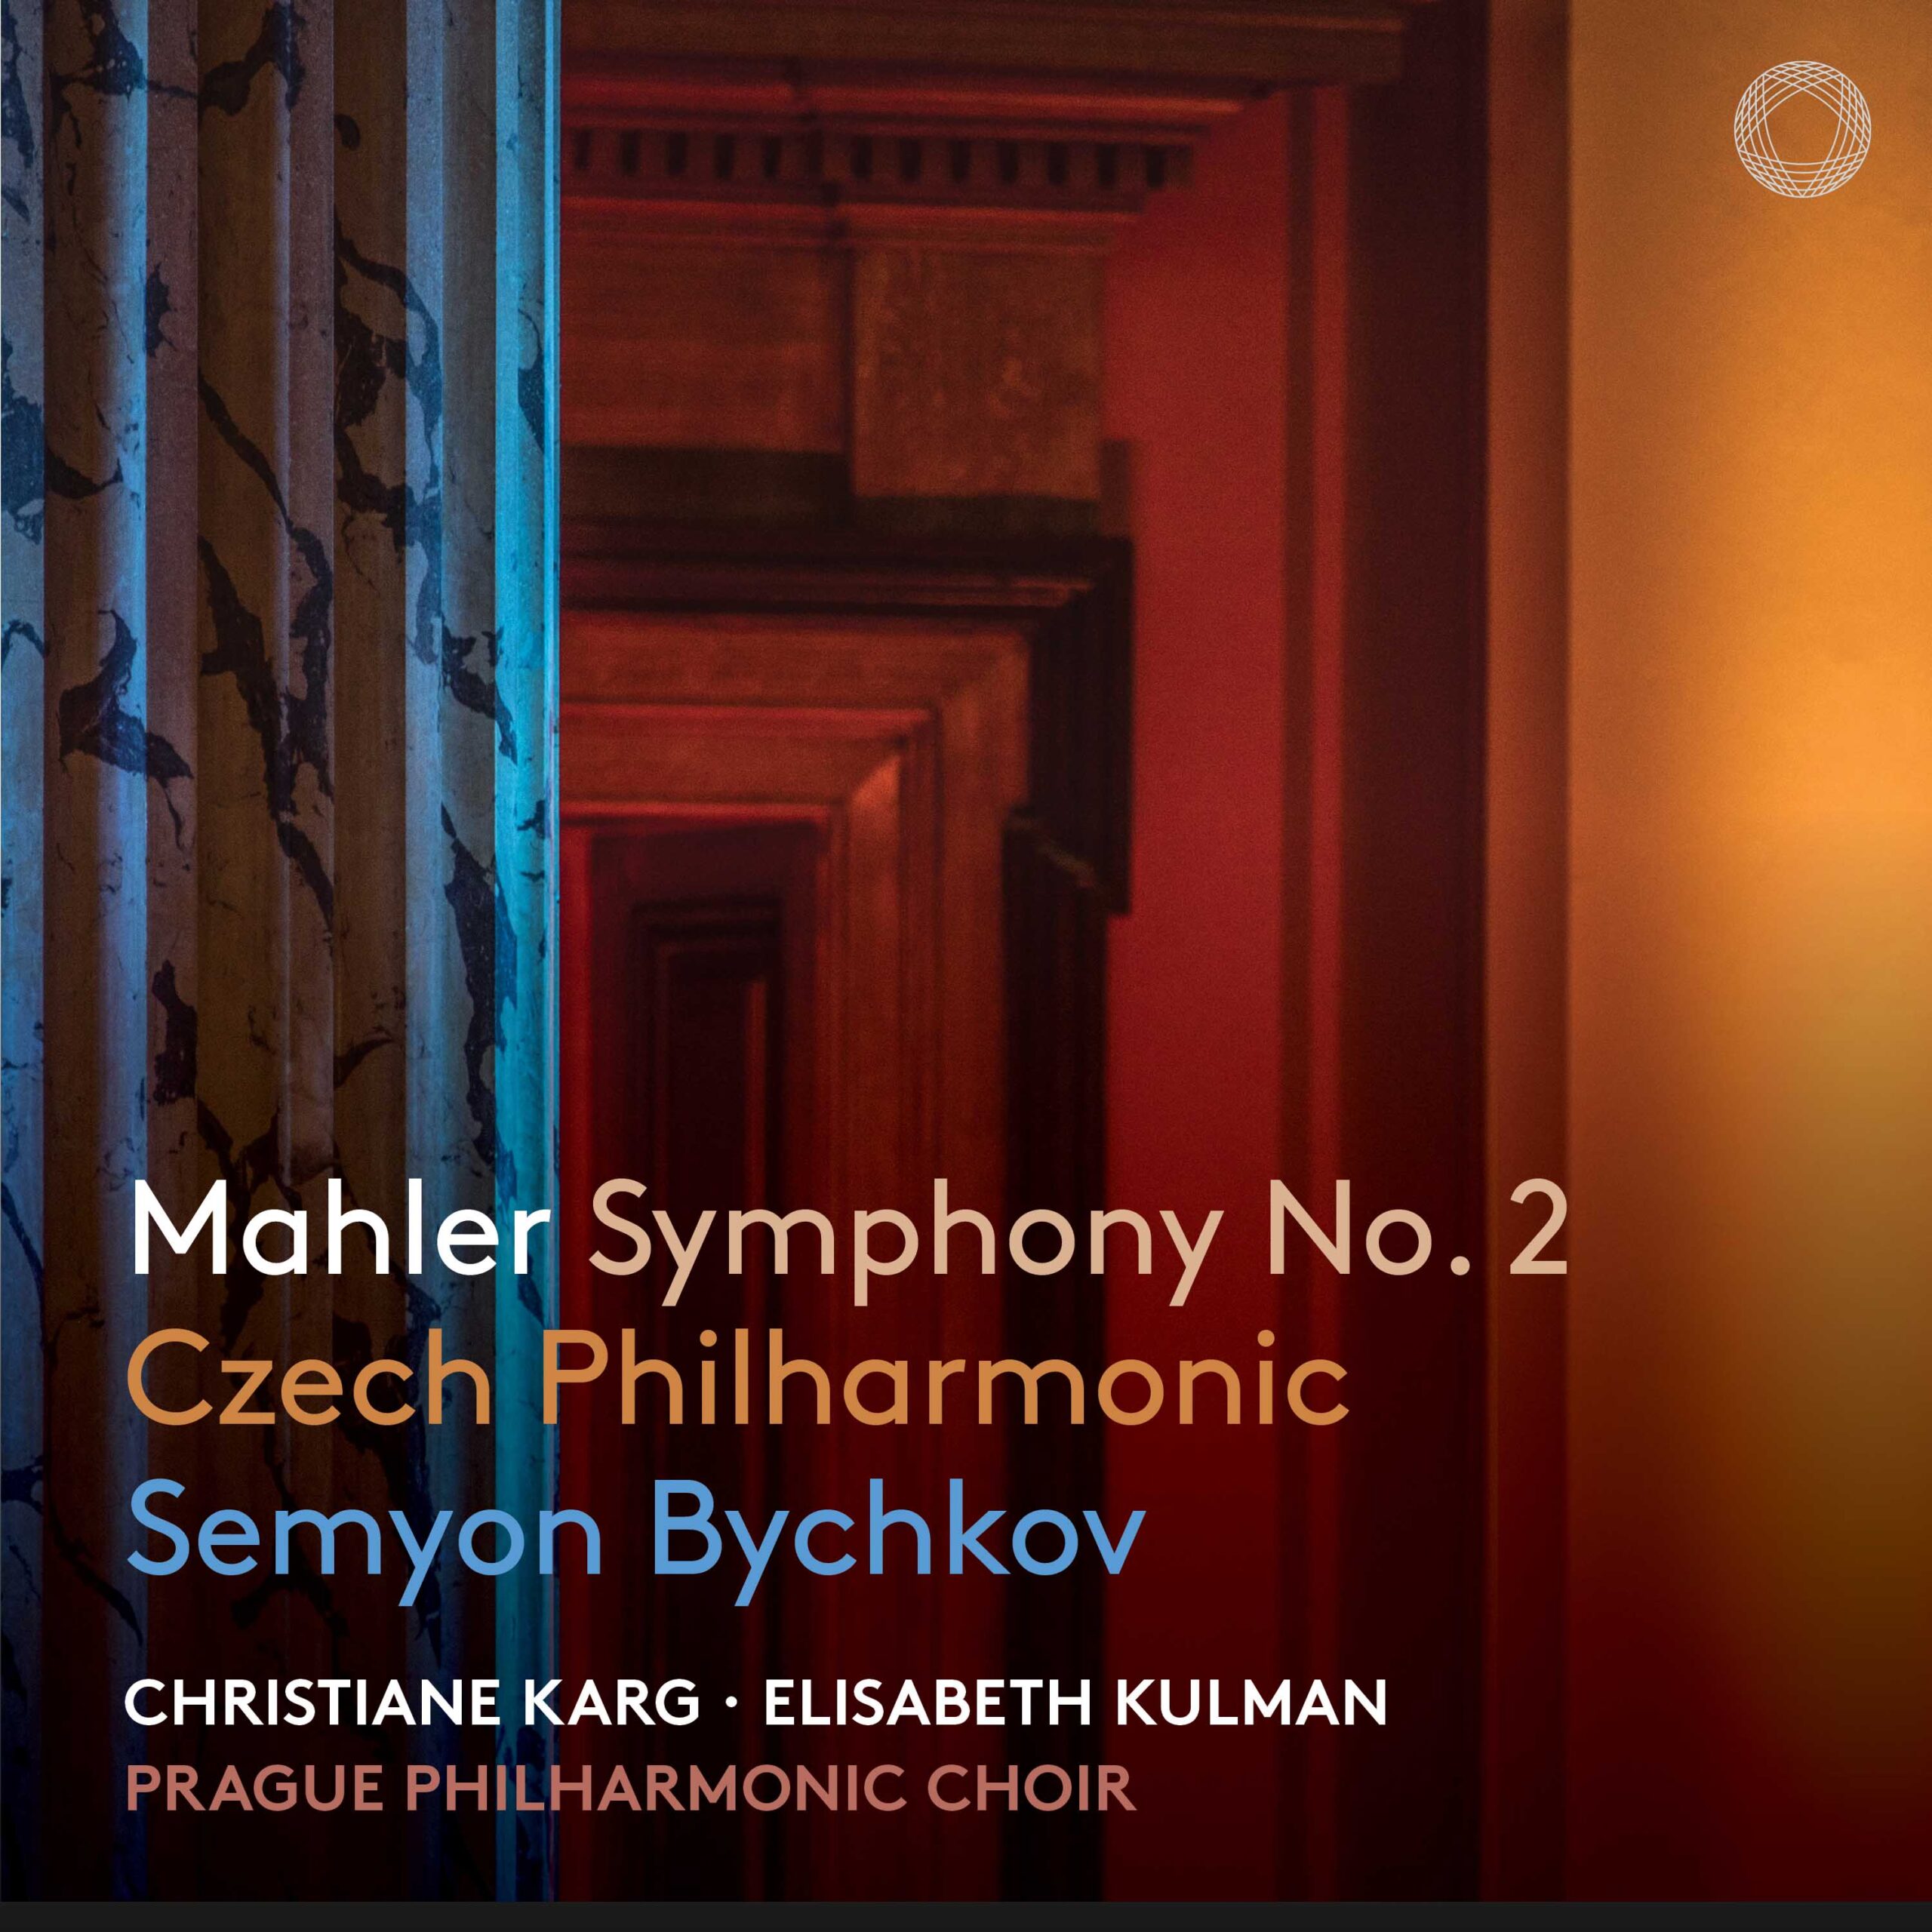 Semyon Bychkov and Czech Philharmonic Mahler 2 album cover